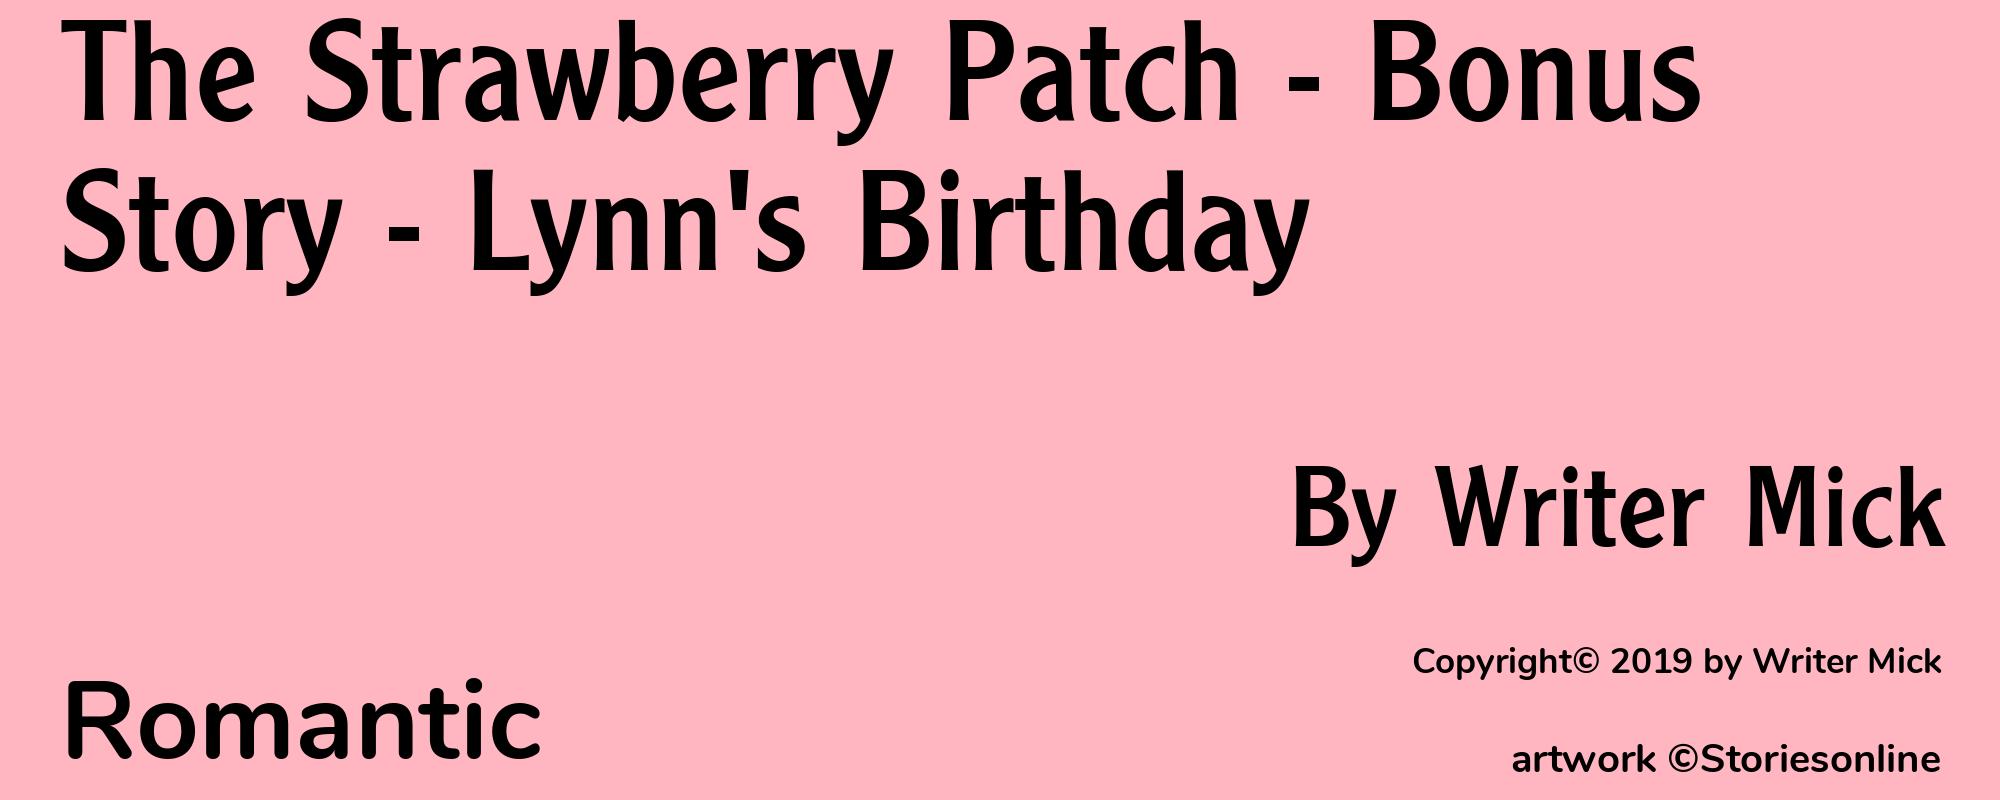 The Strawberry Patch - Bonus Story - Lynn's Birthday - Cover